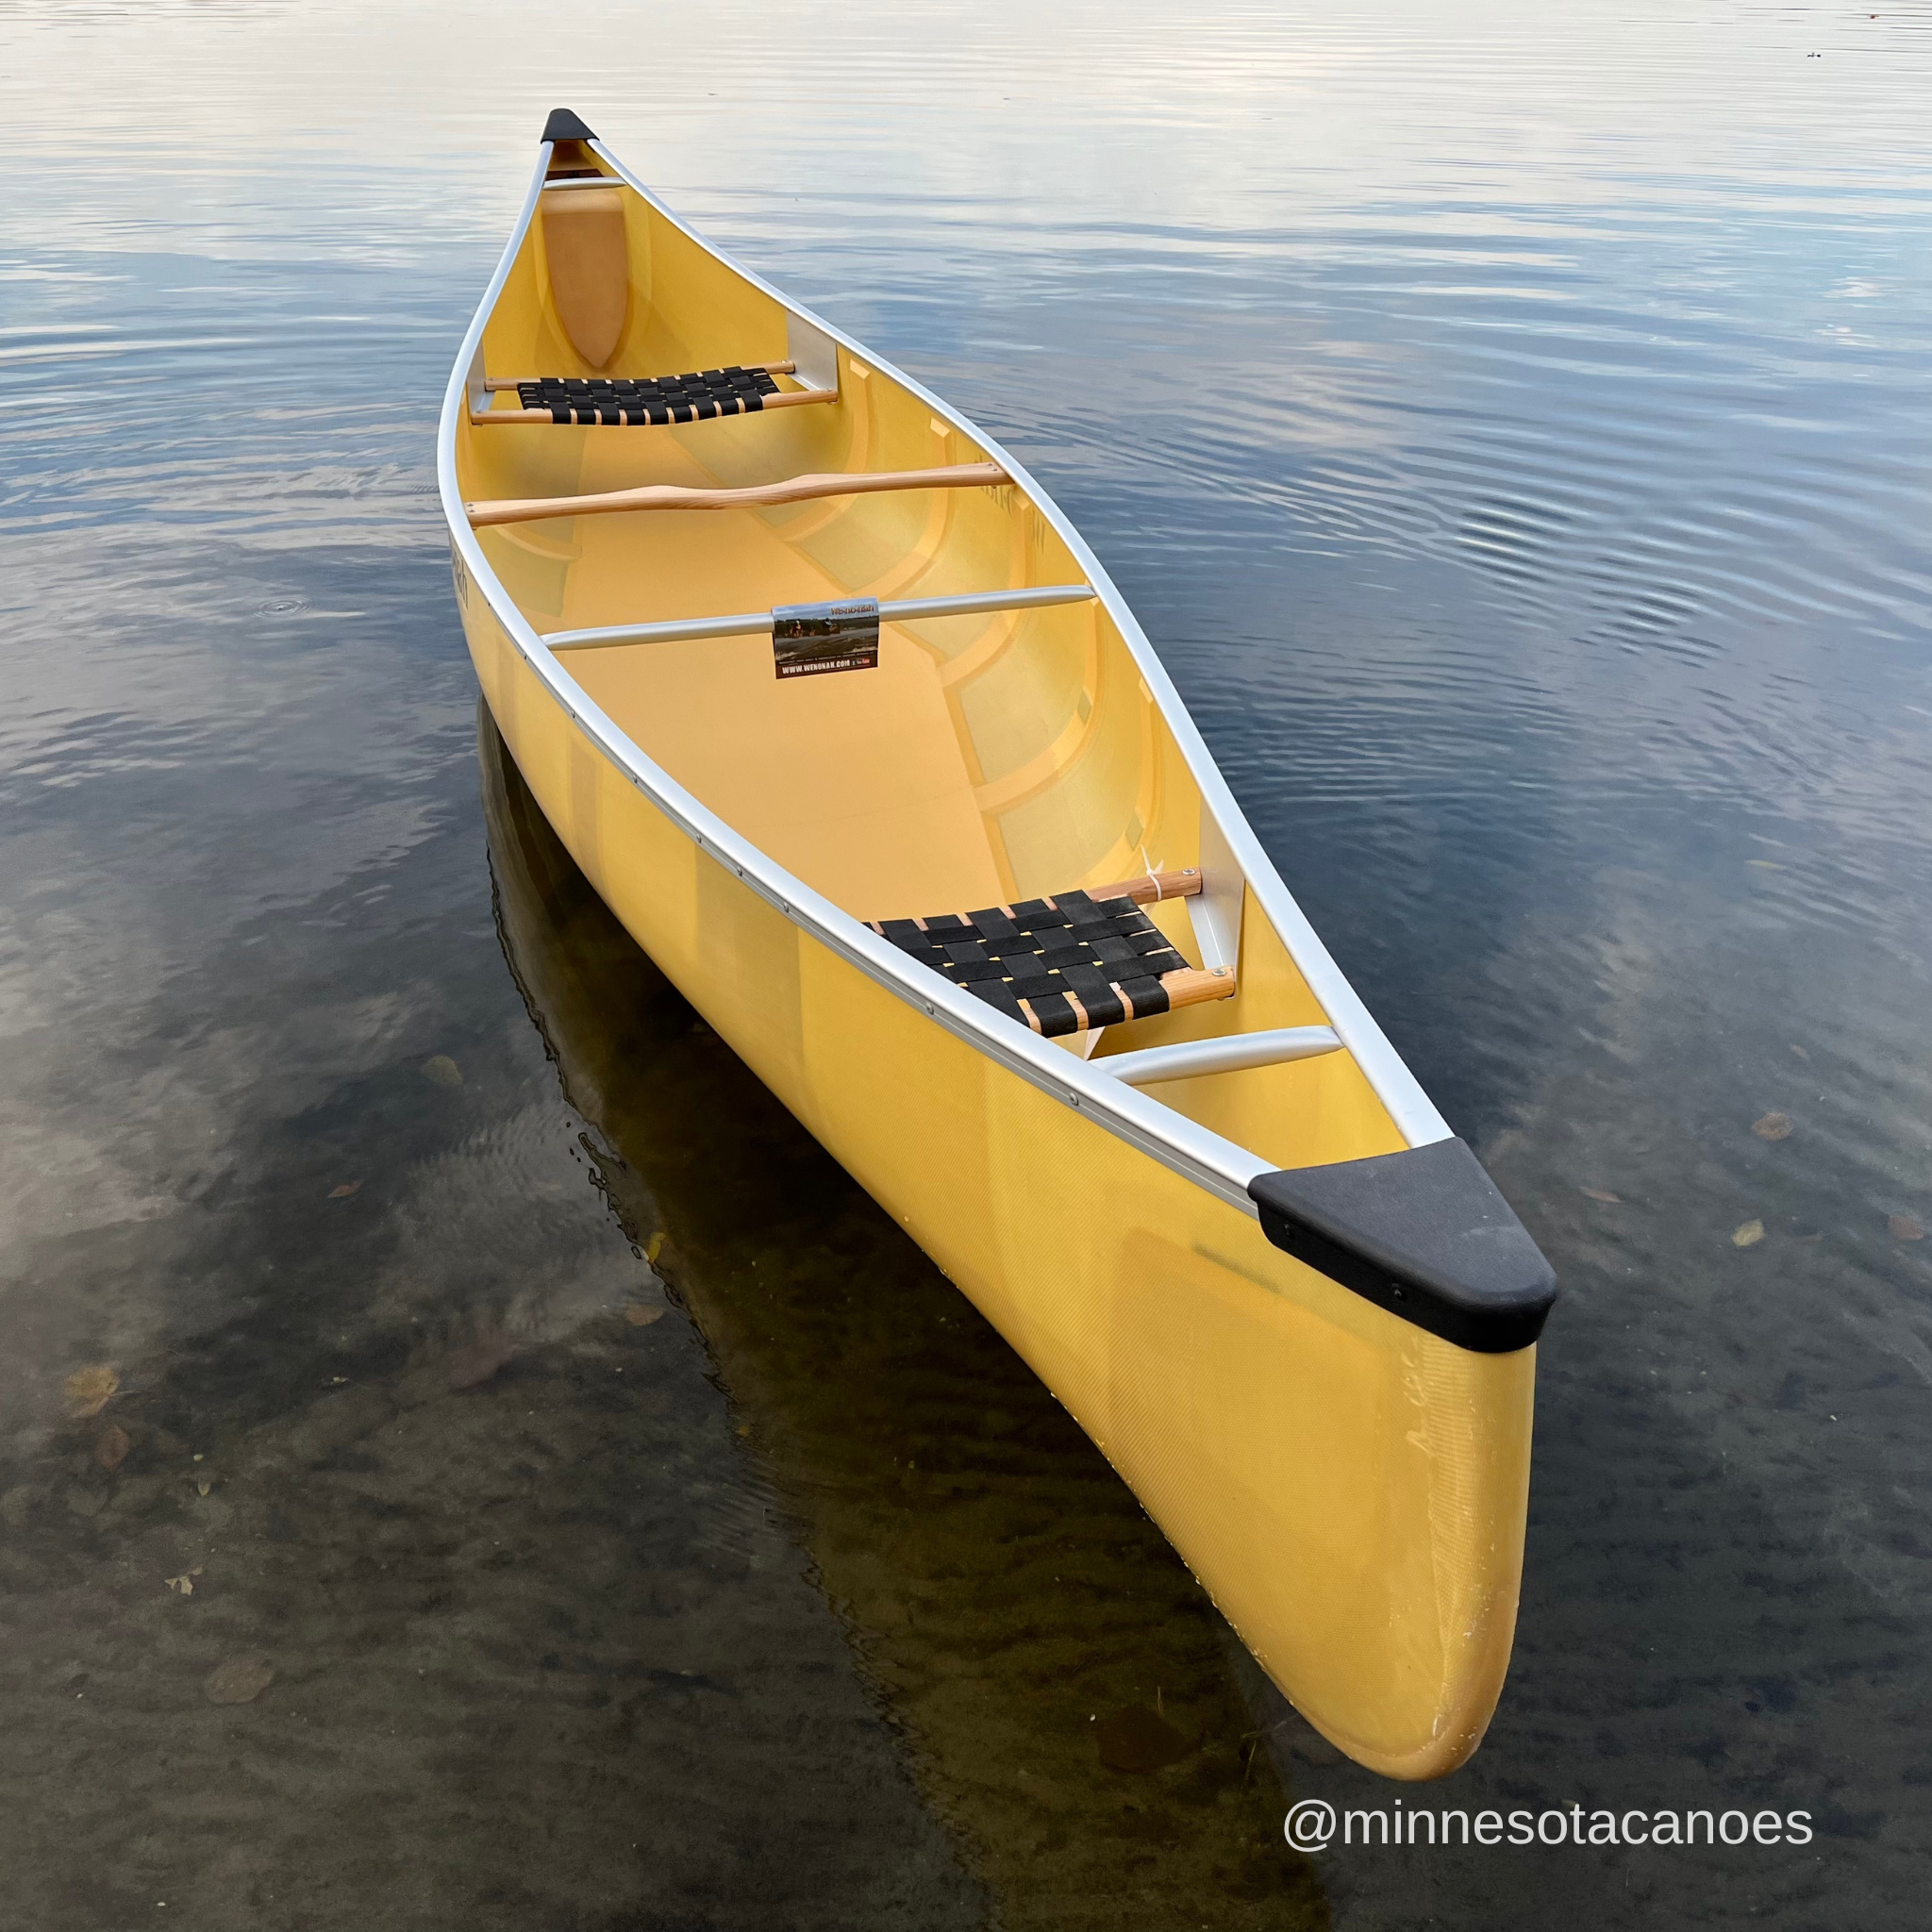 PROSPECTOR 16 (16' 0") Aramid Ultra-light w/Silver Trim Tandem Wenonah Canoe